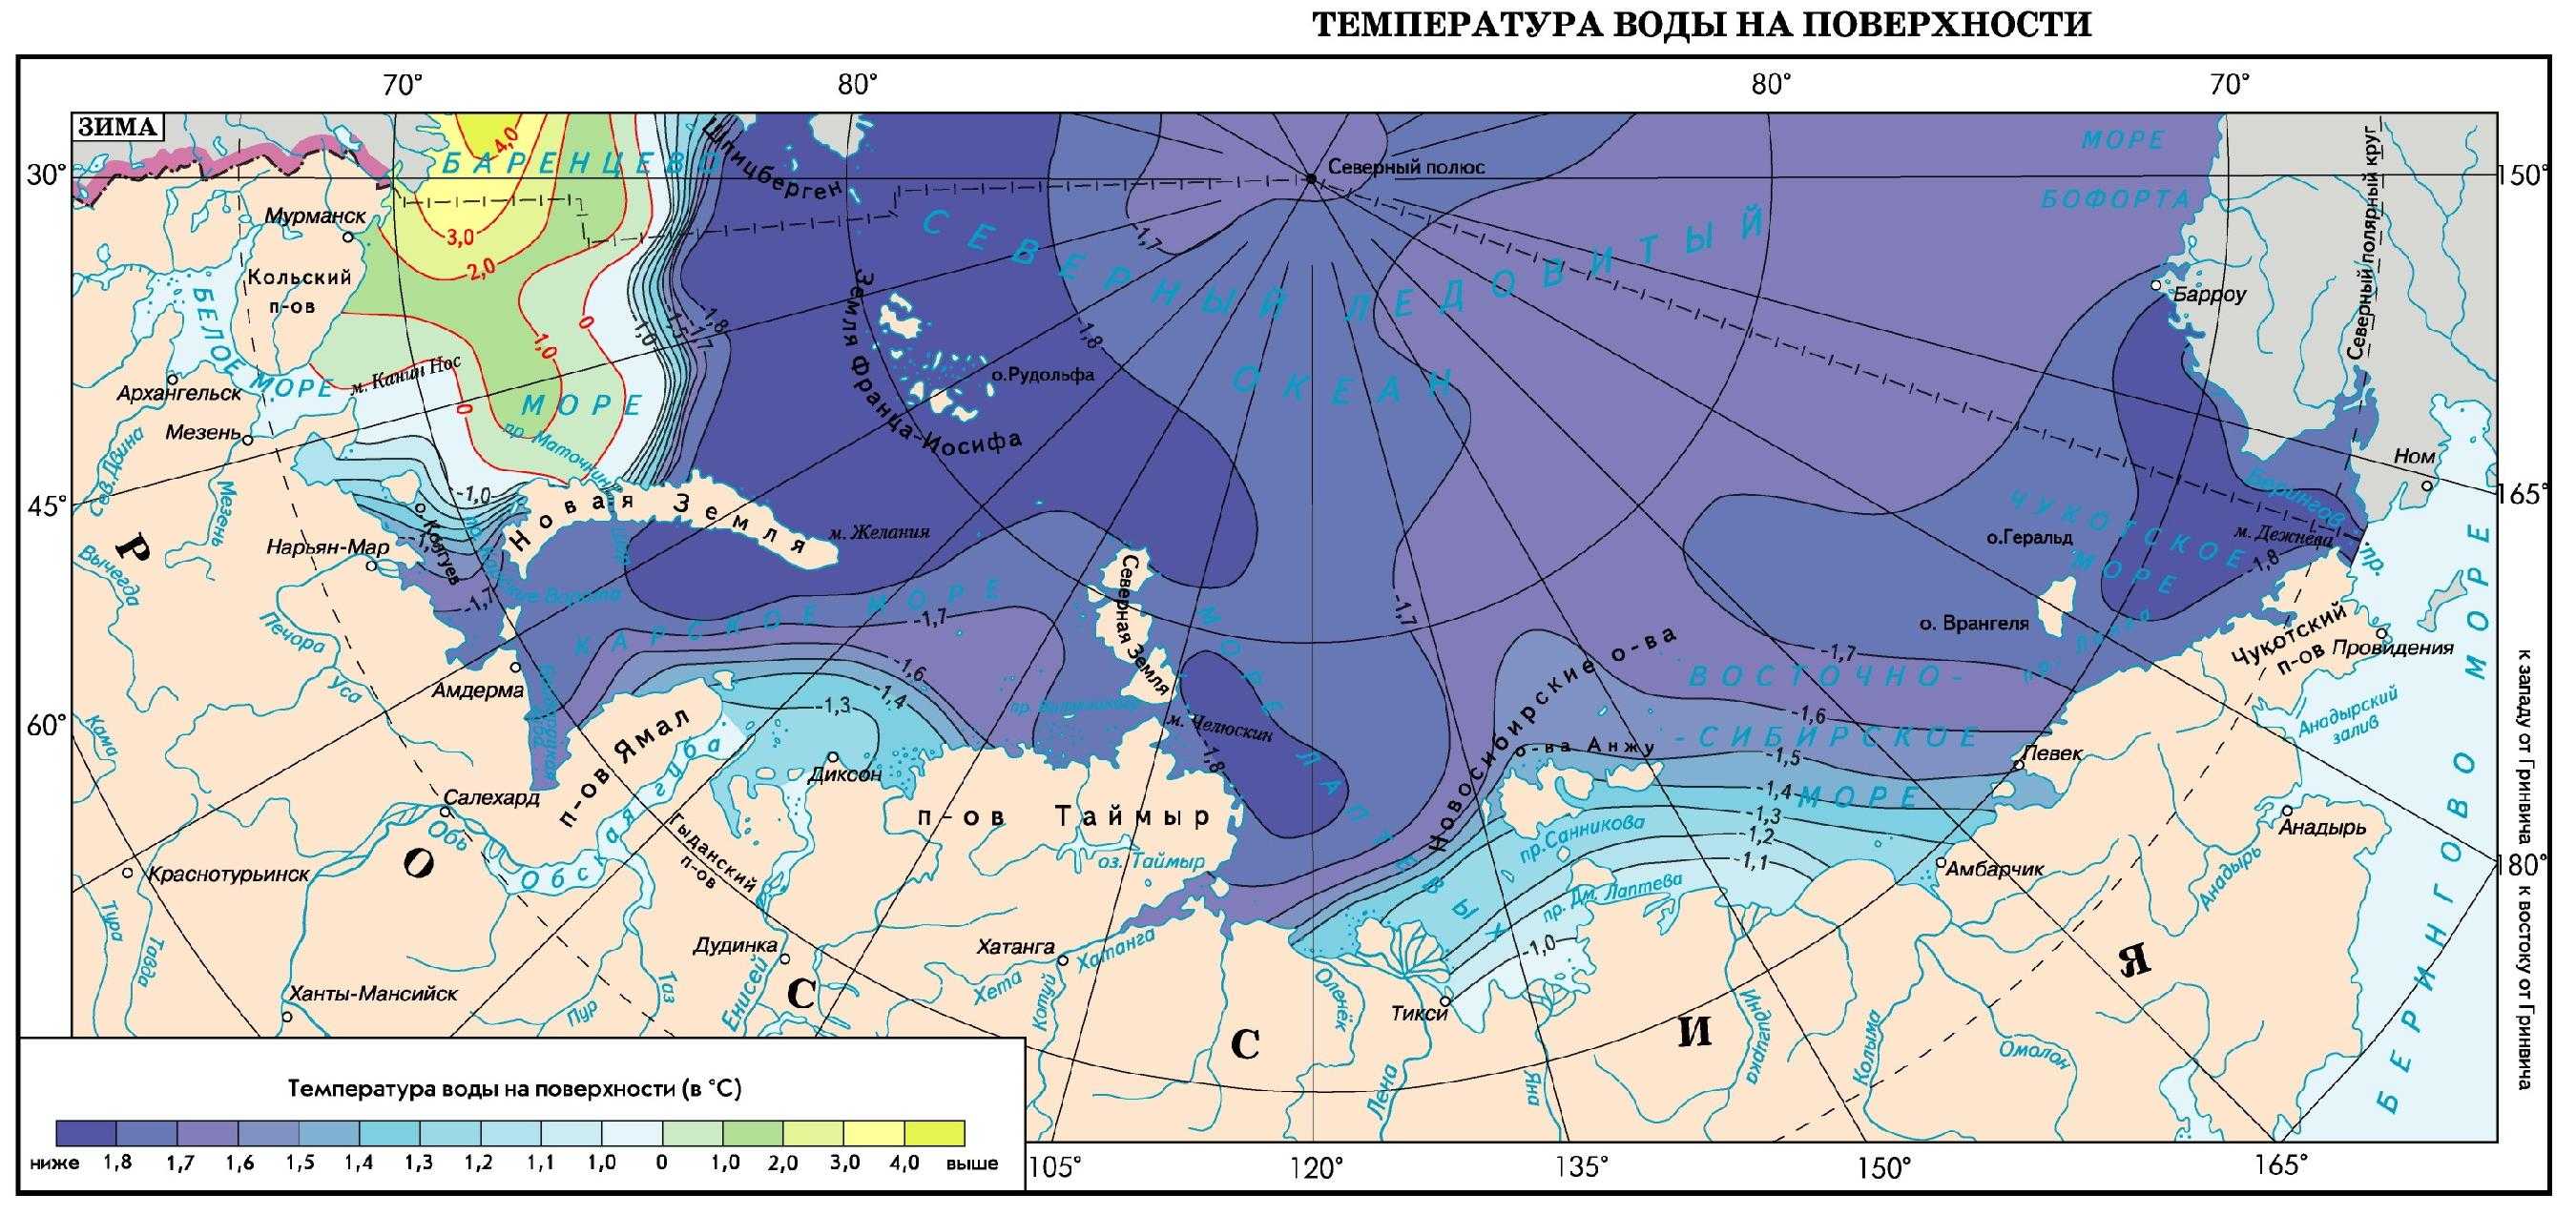 Карта климата Северного Ледовитого океана. Климатическая карта Северного Ледовитого океана. Климатические пояса Северного Ледовитого океана. Климатические пояса Северного Ледовитого океана карта. Чукотское море бассейн океана